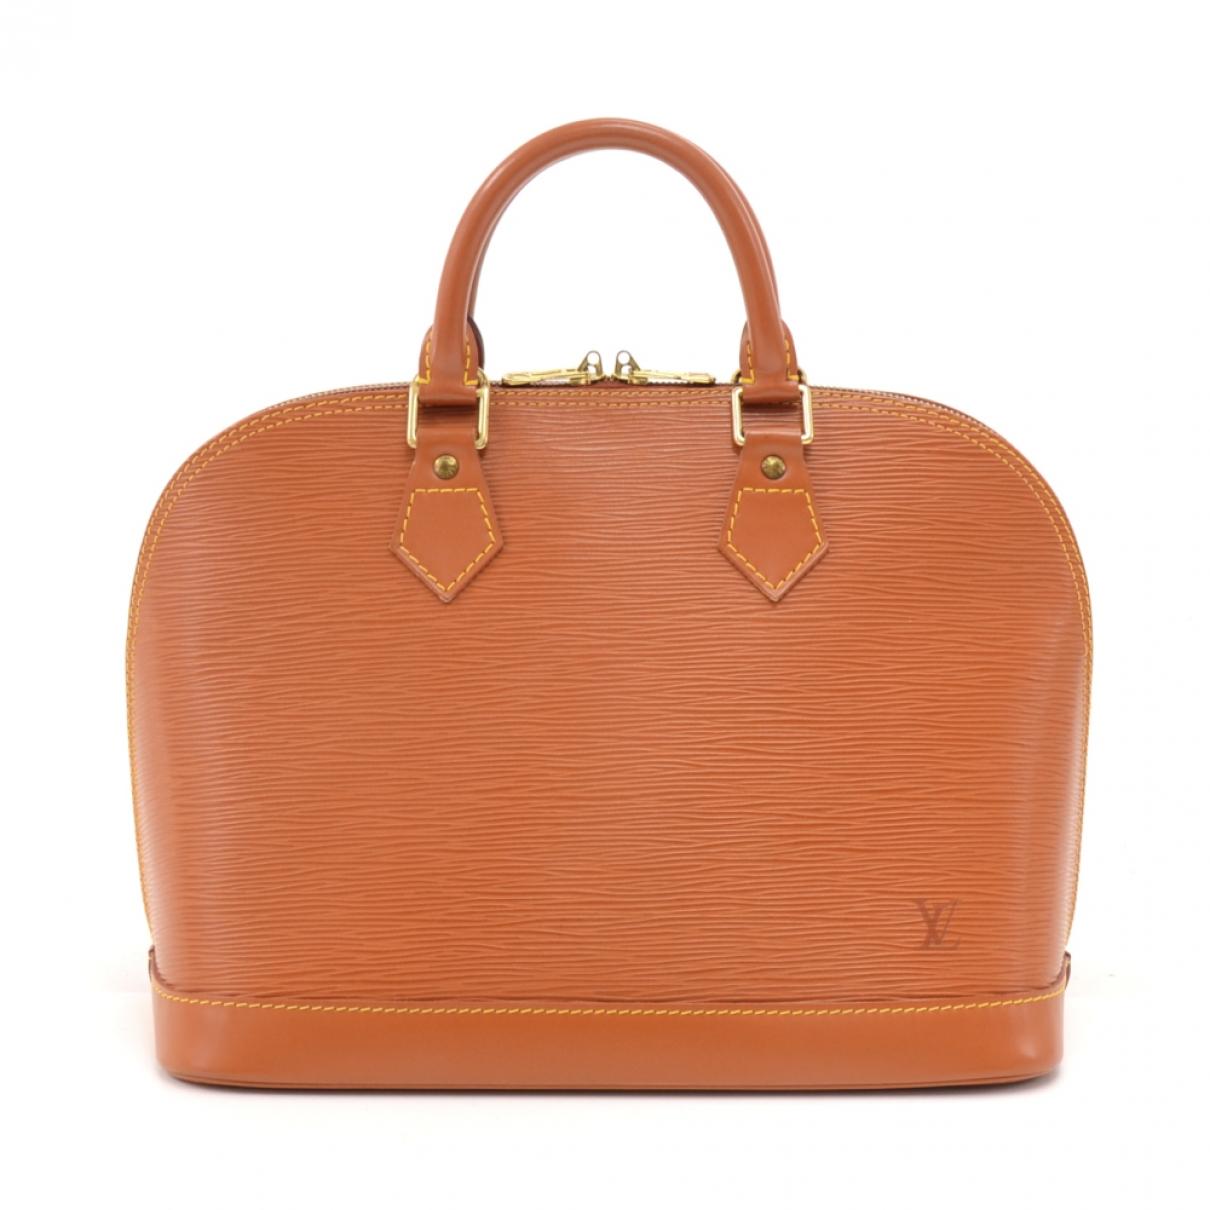 Lyst - Louis Vuitton Vintage Alma Brown Leather Handbag in Brown